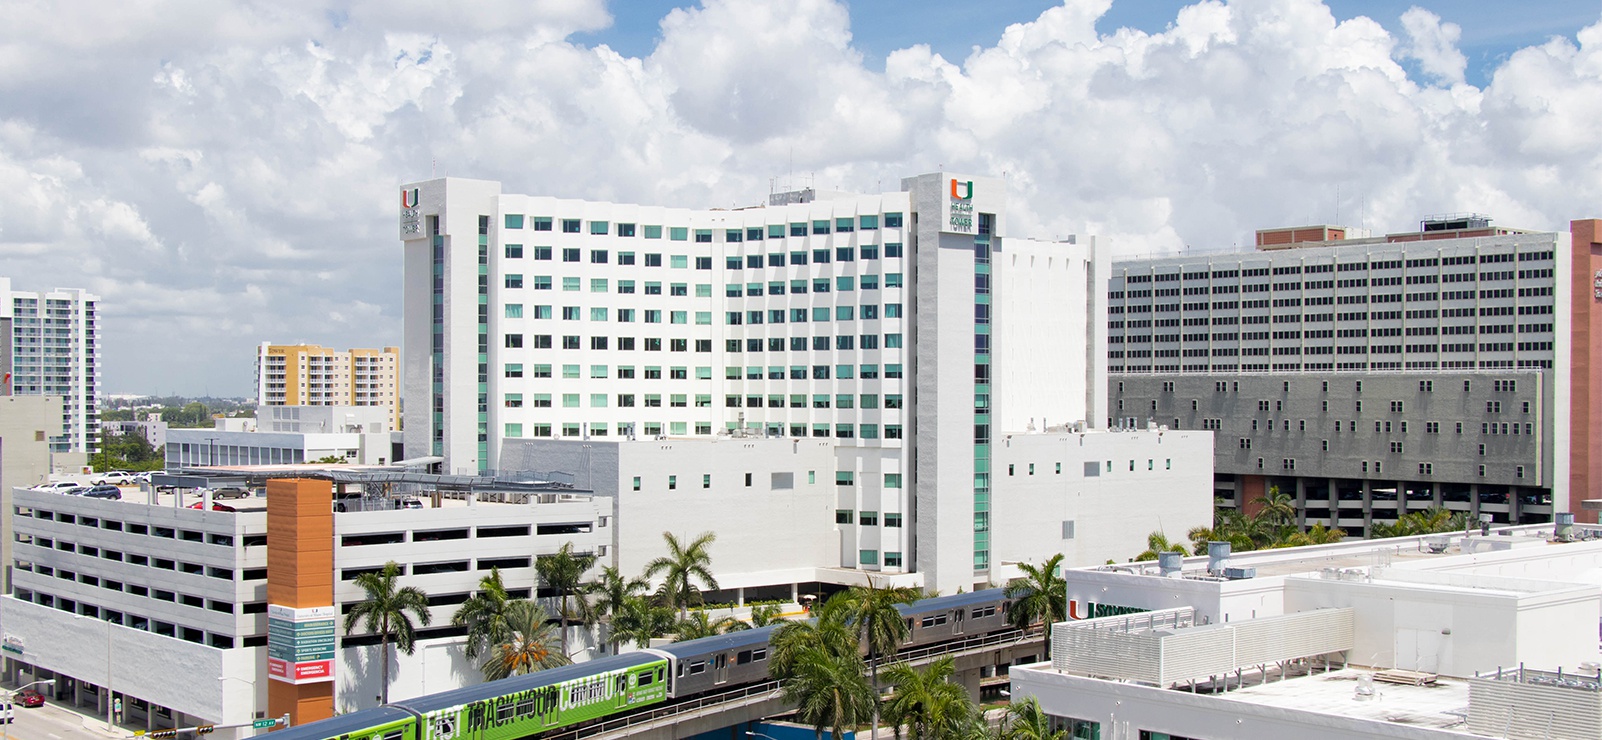 University of Miami Hospital cover